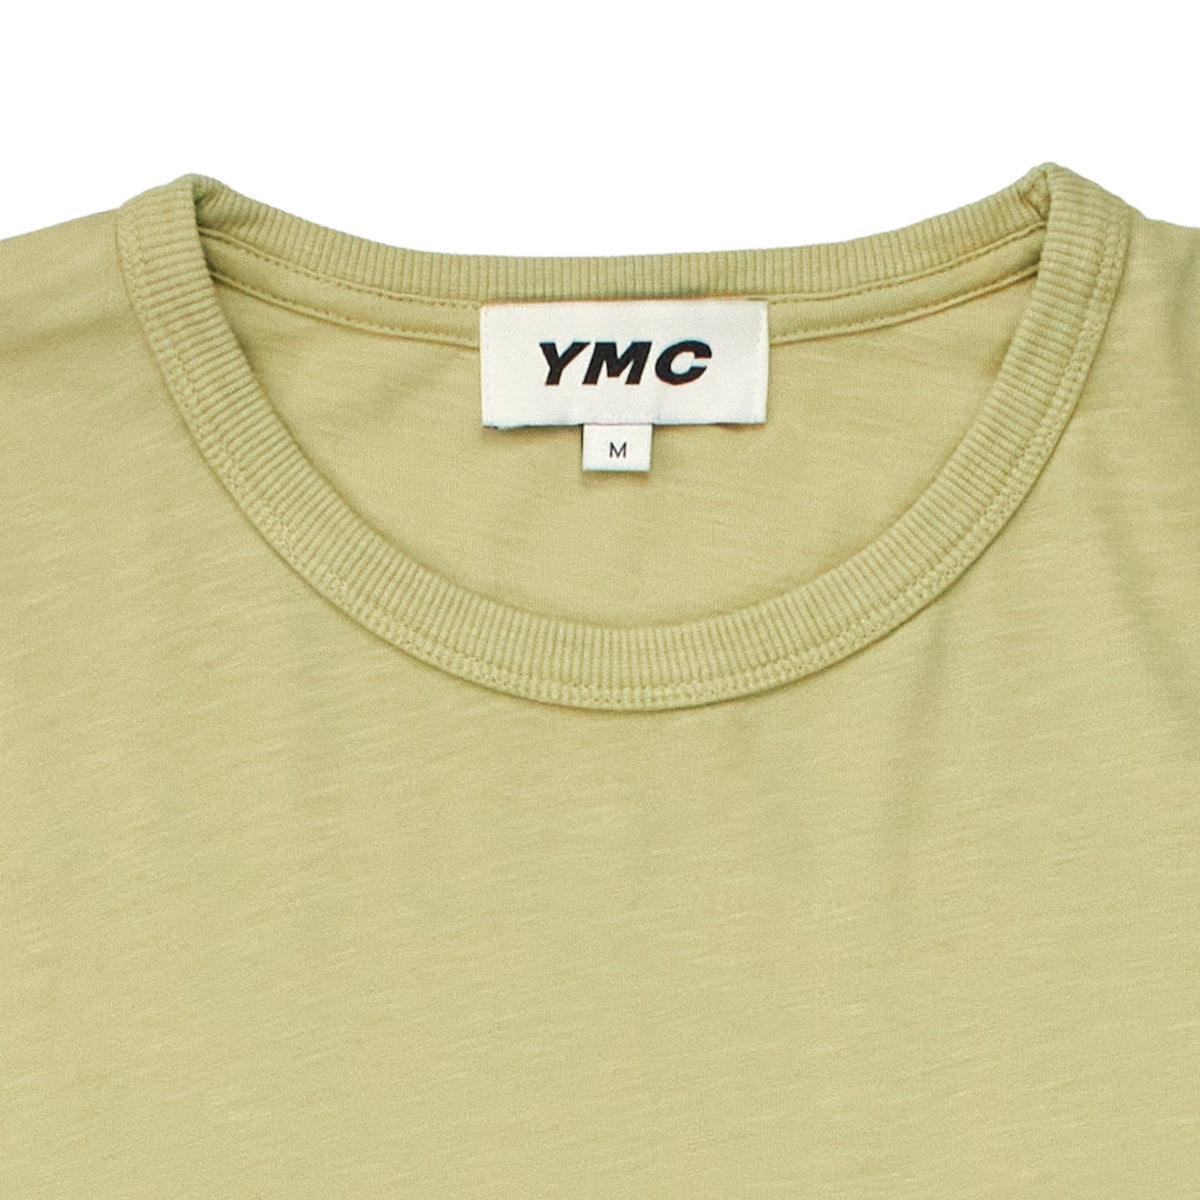 YMC Light Olive Pocket T Shirt